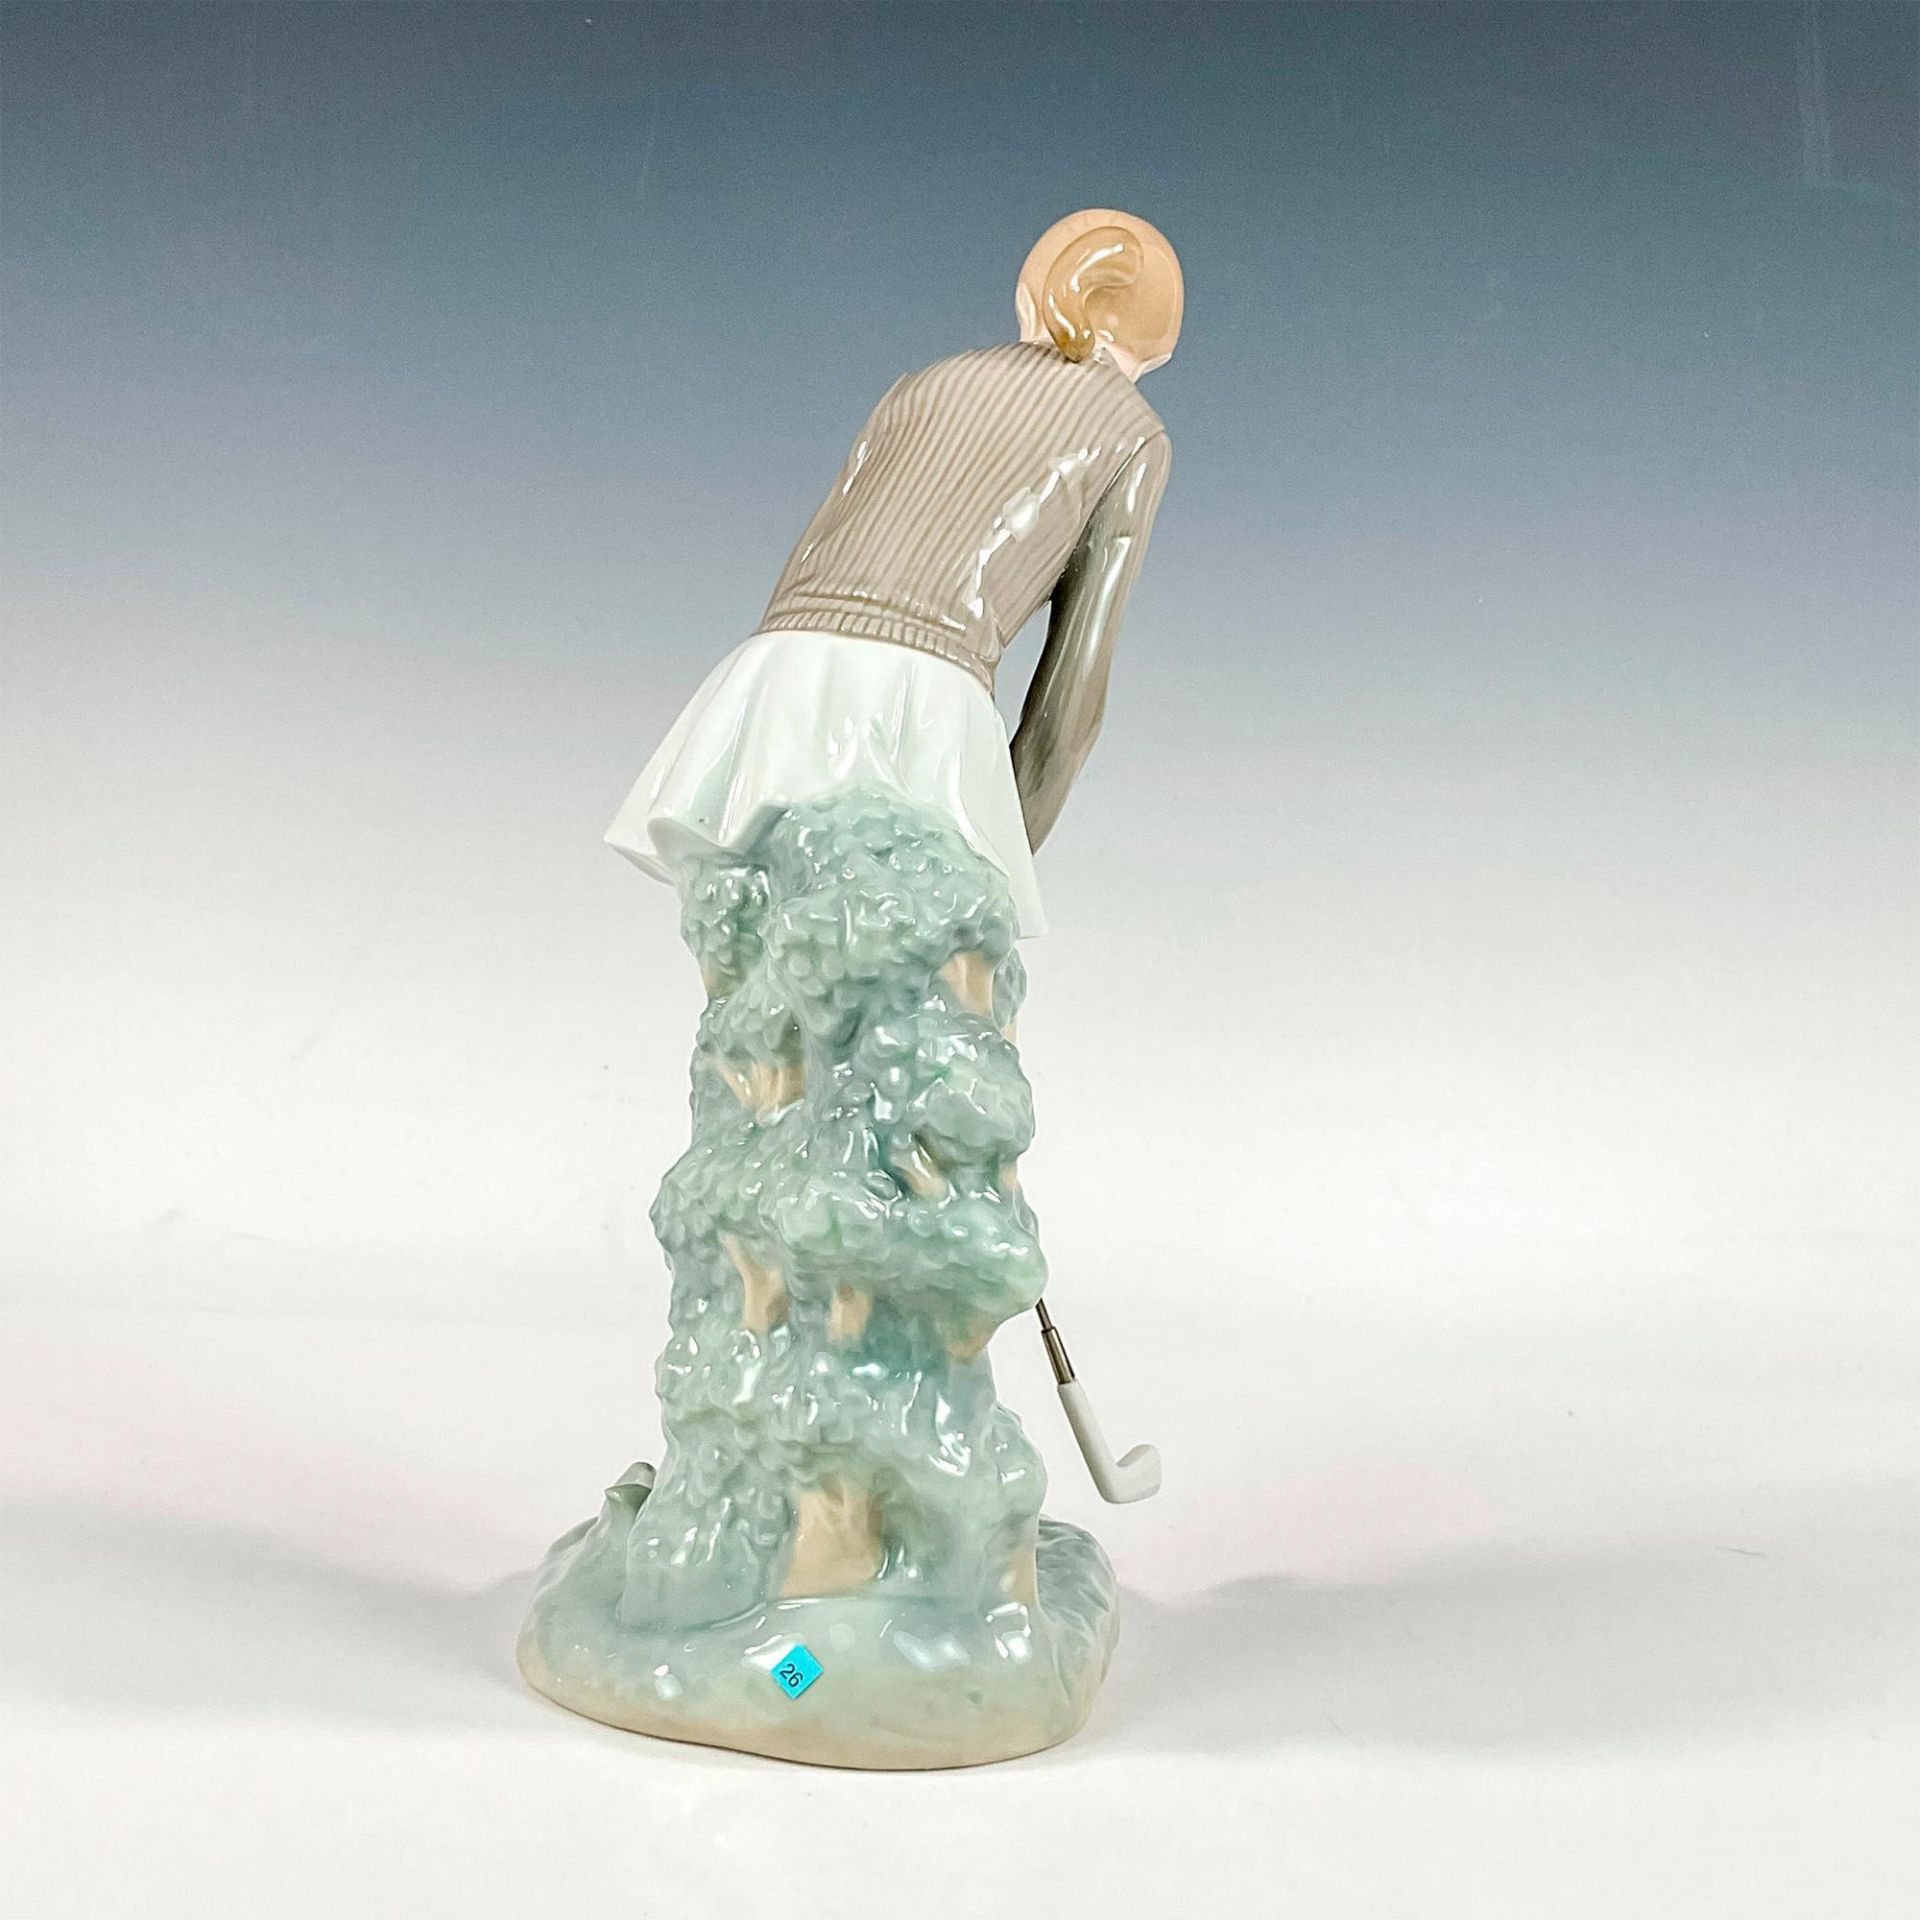 Lady Golfer 1004851 - Lladro Porcelain Figurine - Image 2 of 4